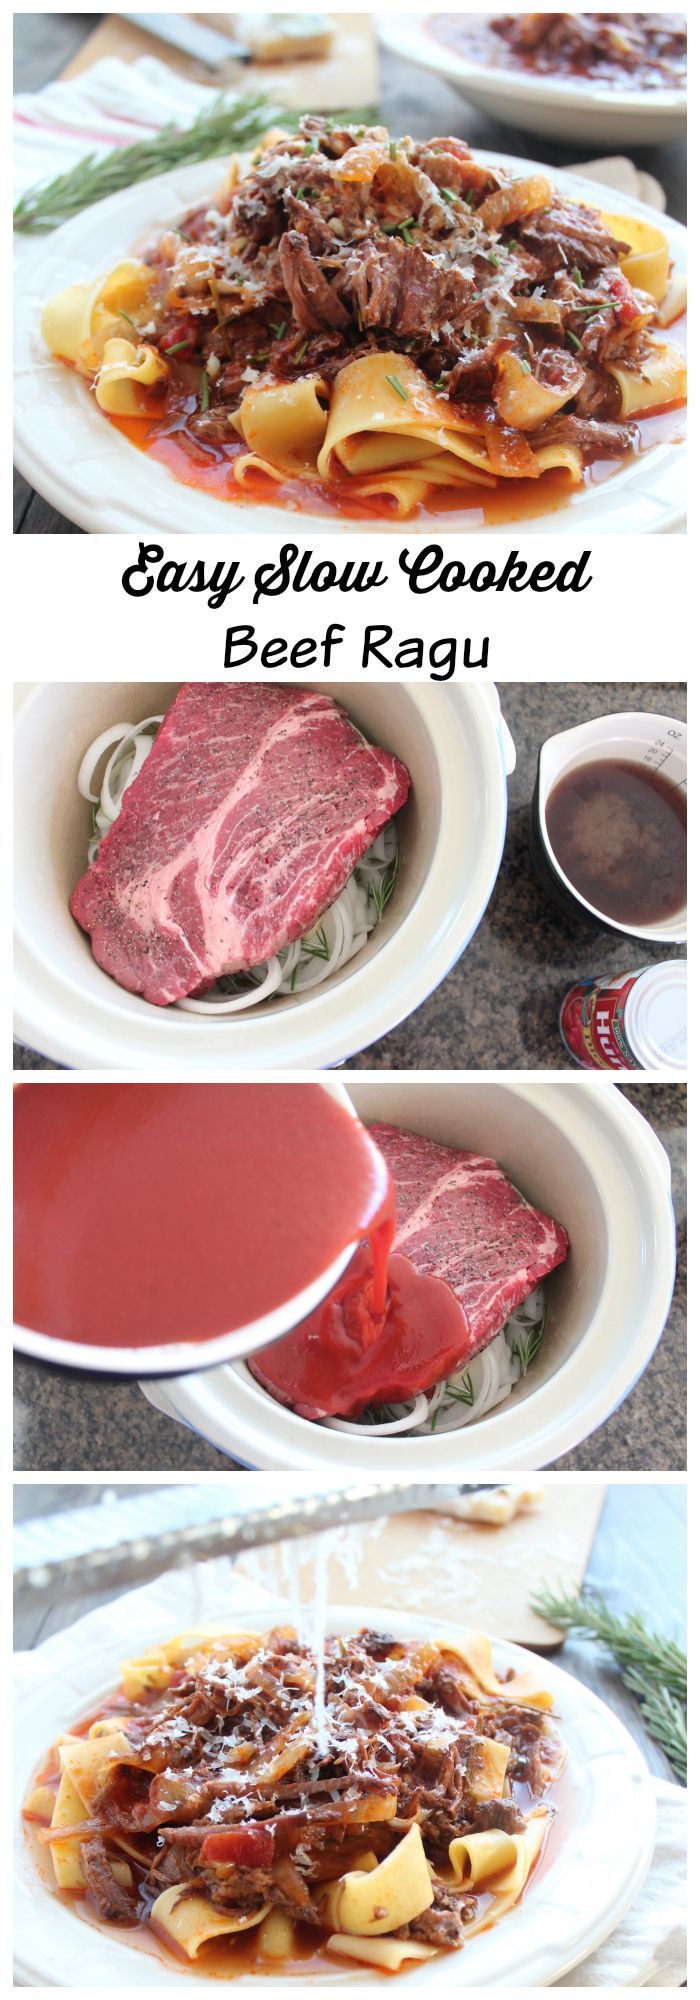 Easy Slow Cooked Beef Ragu Recipe